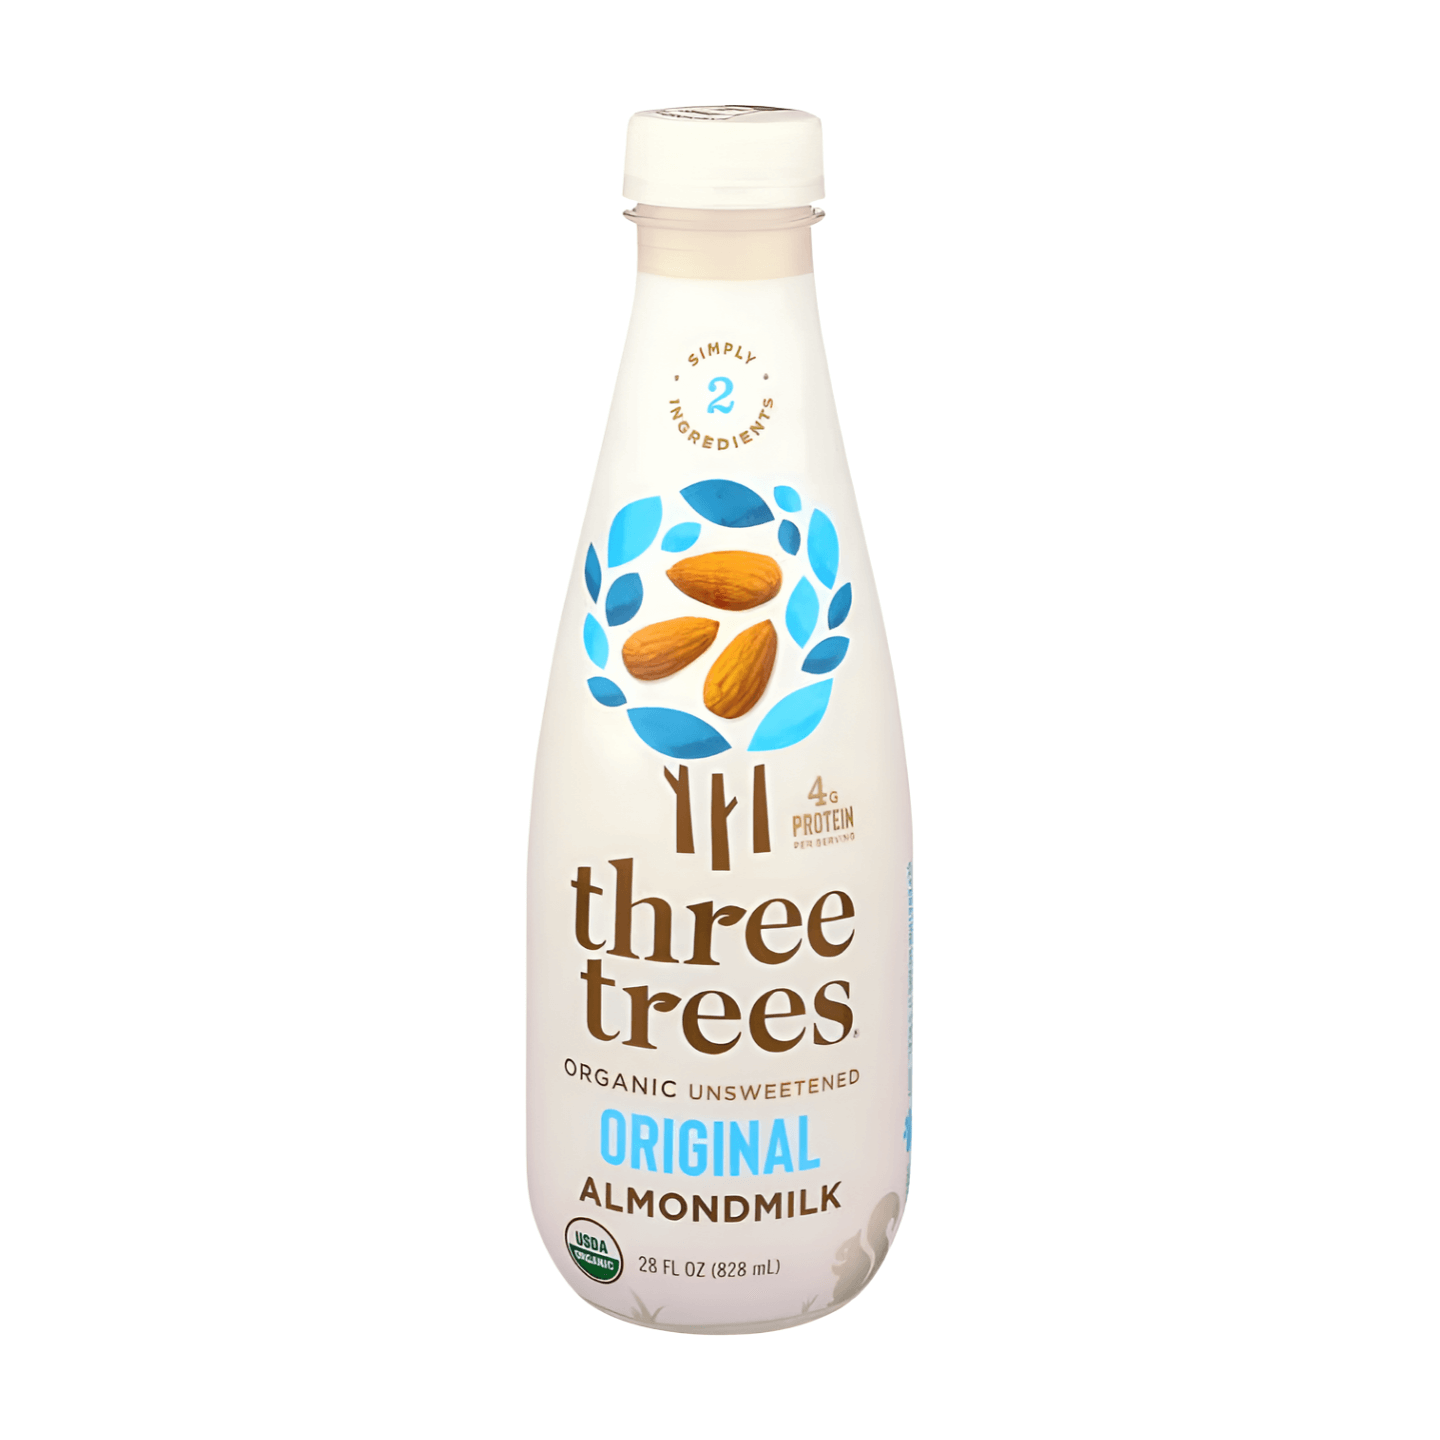 Three Trees Original Almondmilk